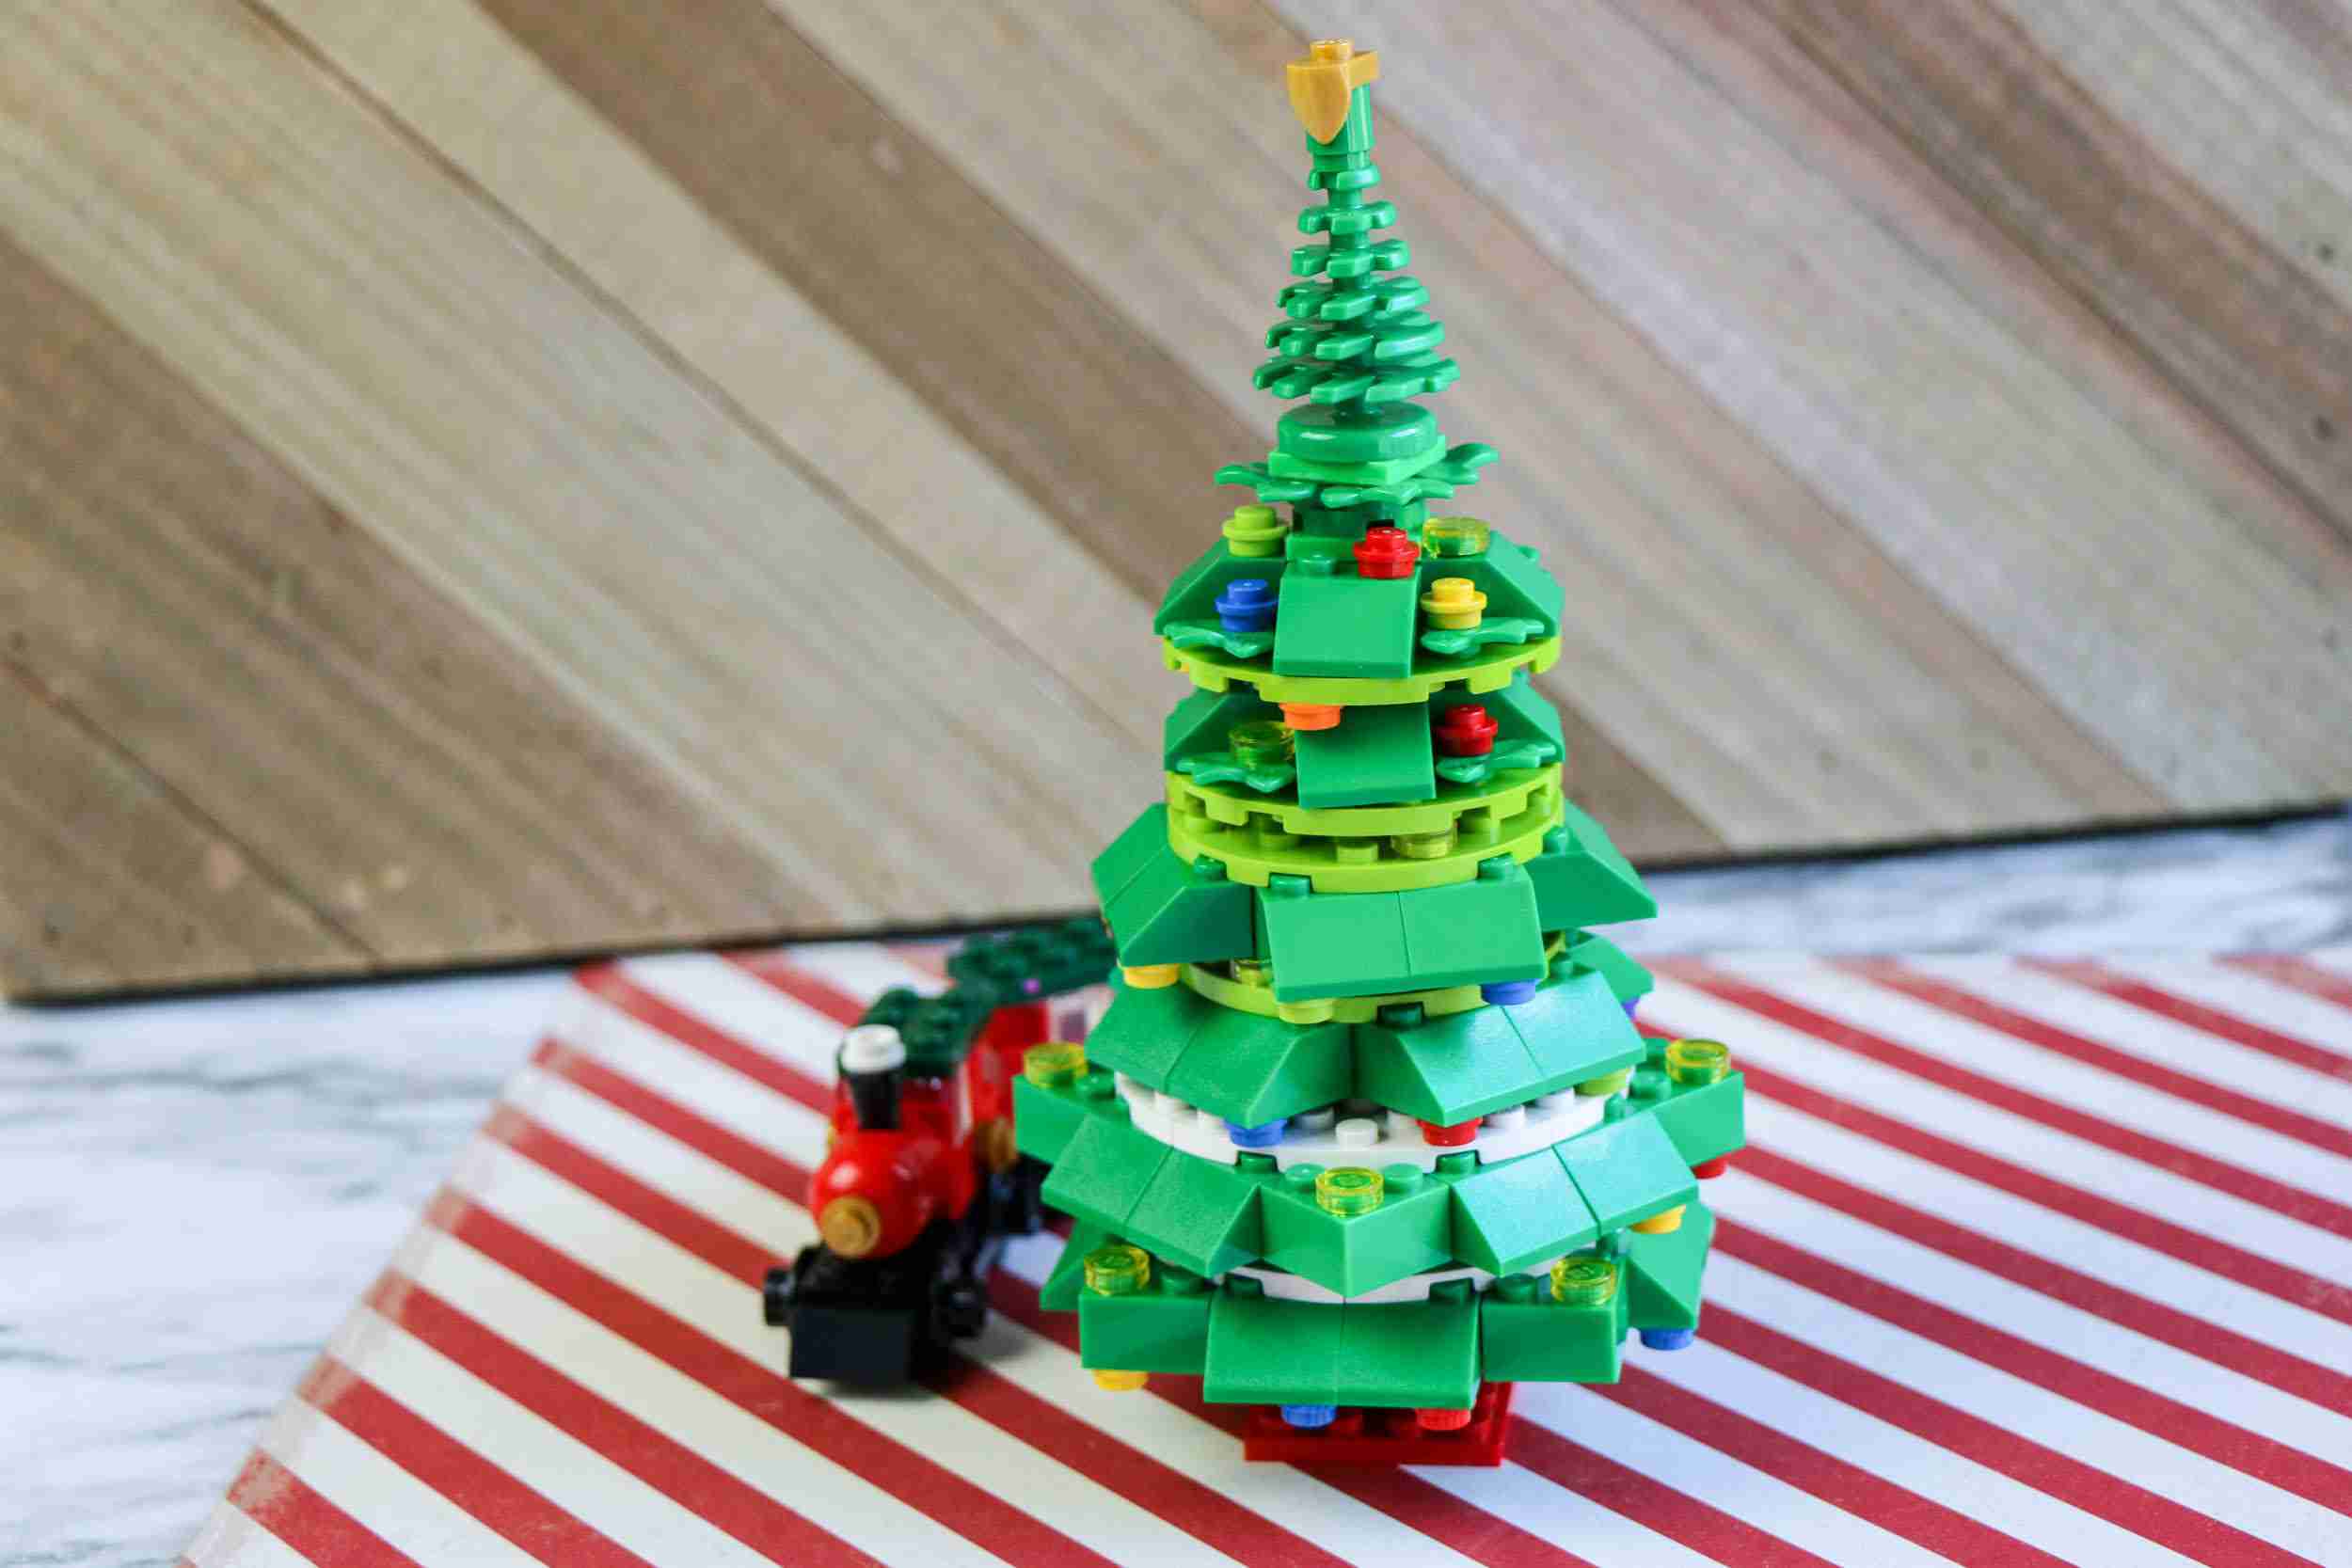 diy lego christmas tree, lego train, christmas train, holiday decorations, christmas decor, kid crafts, easy crafting